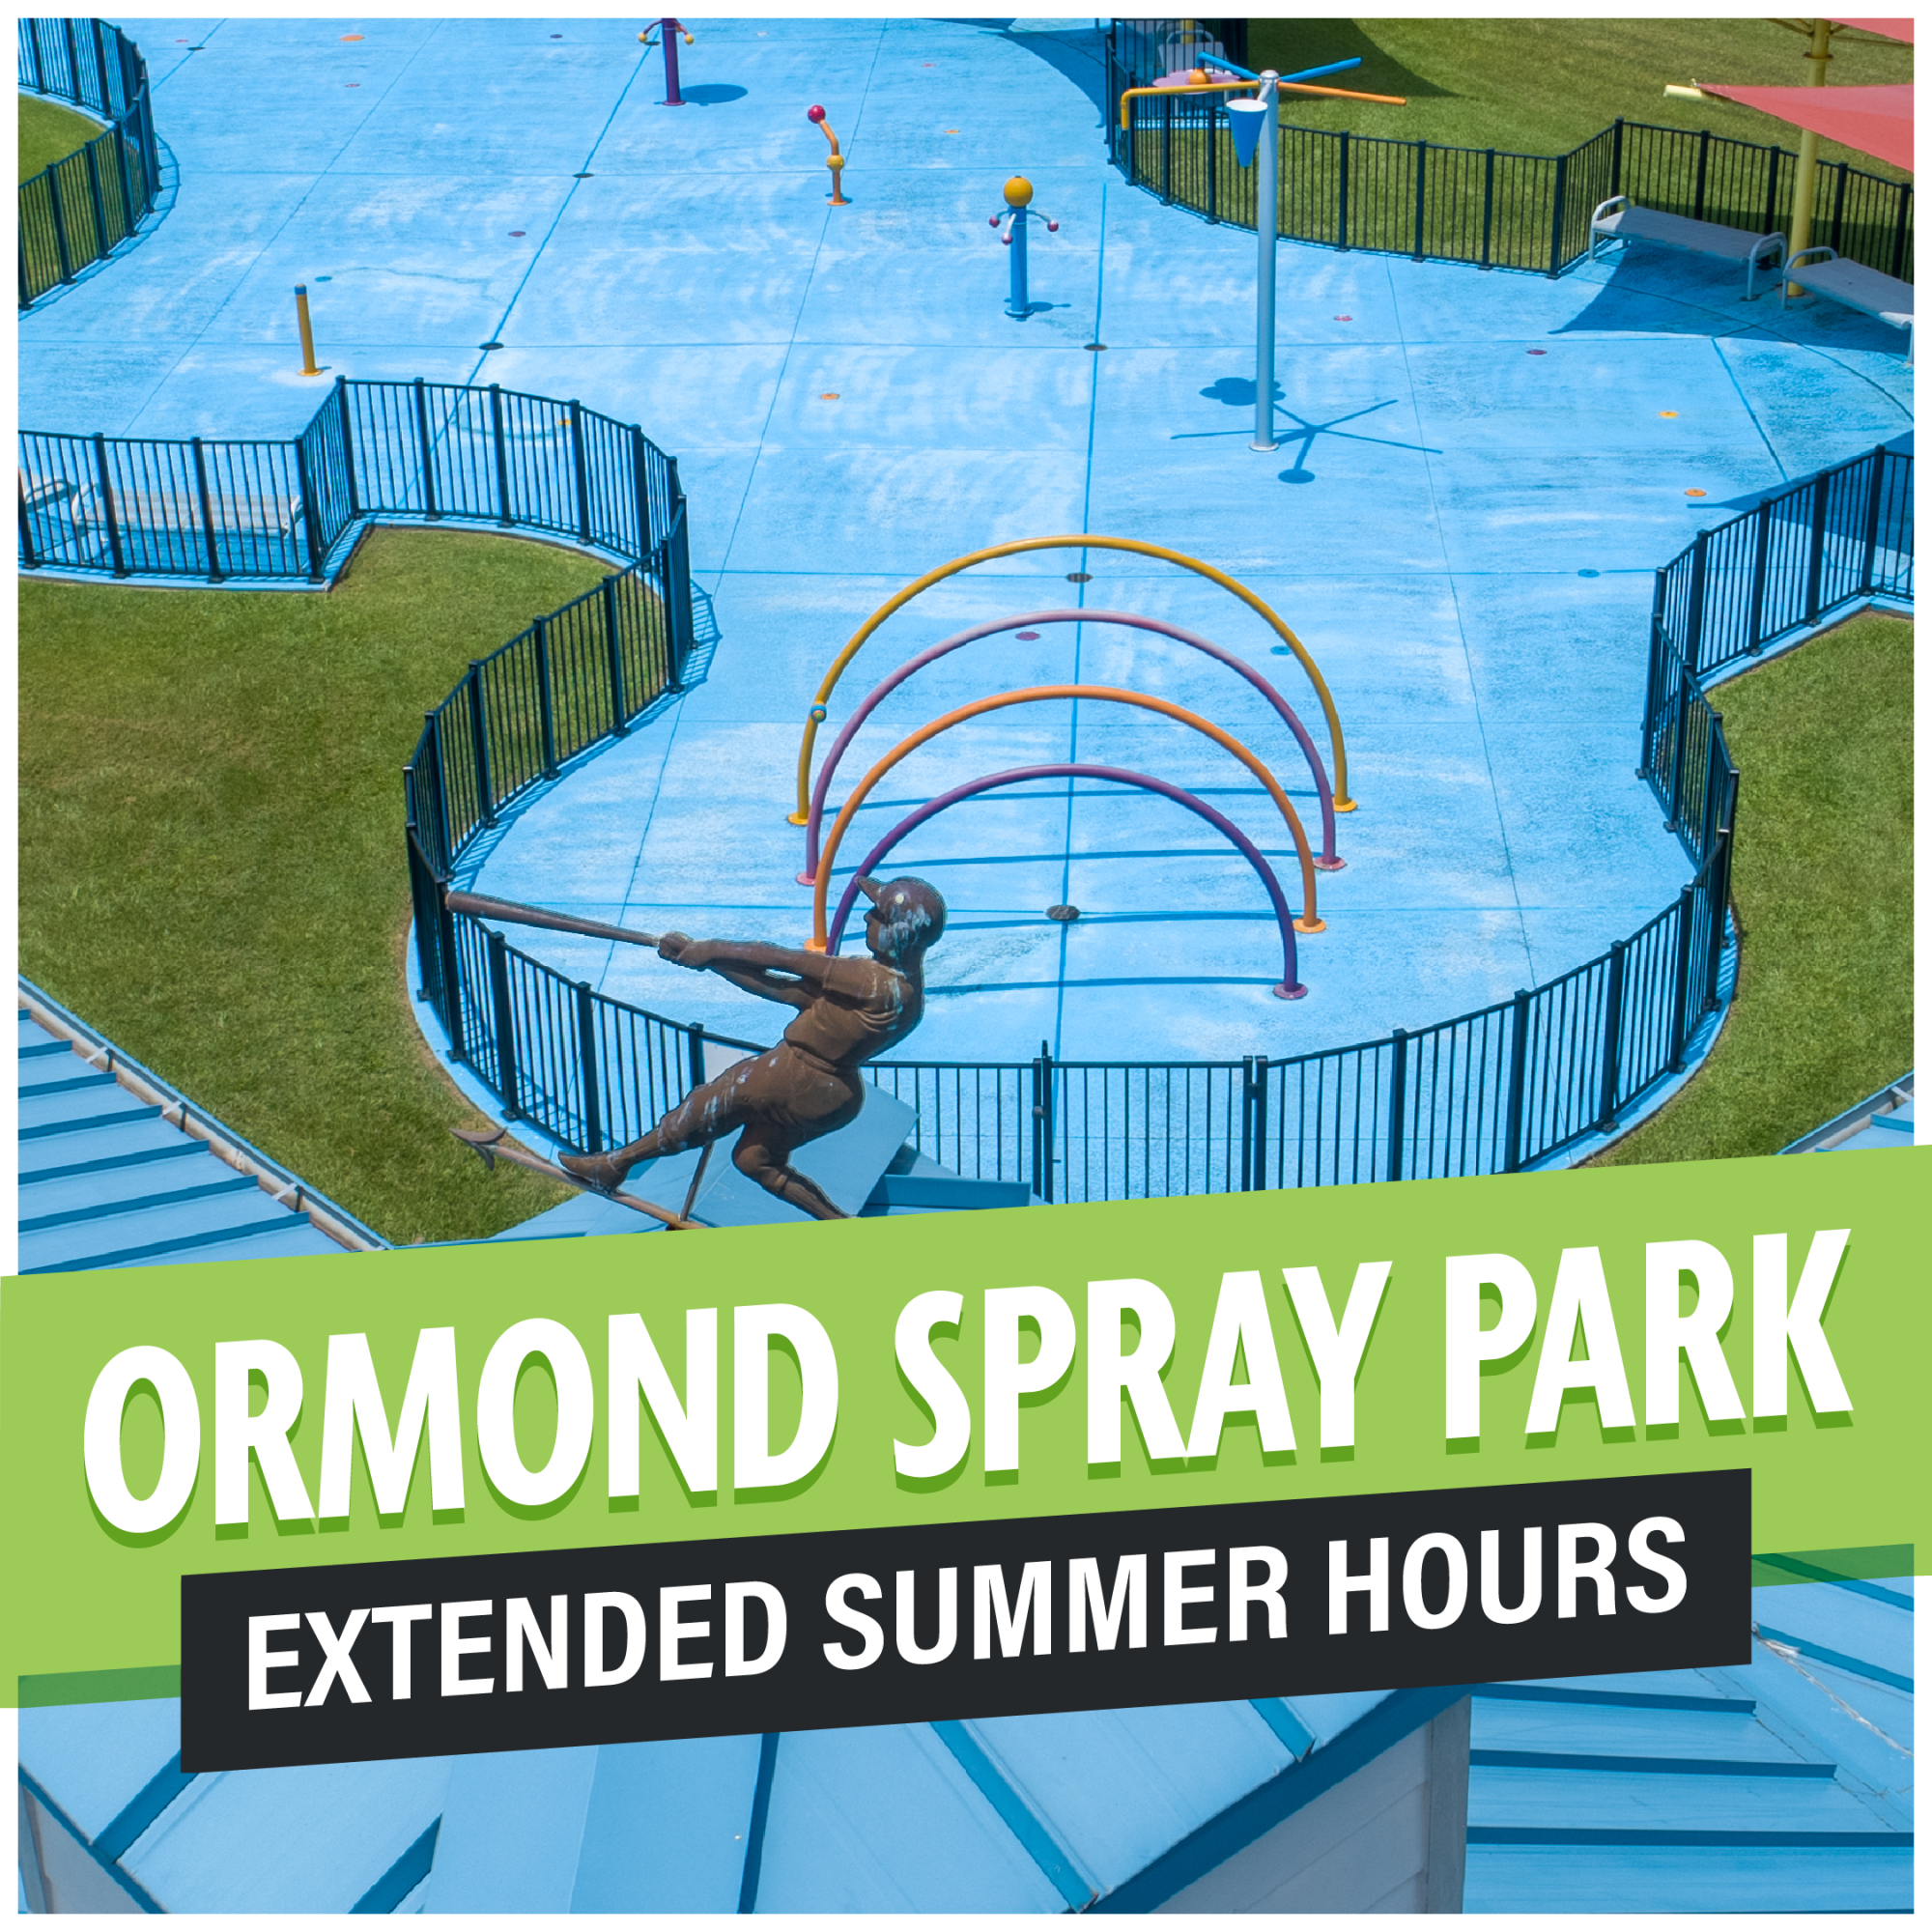 ORMOND SPRAY PARK OPEN FOR EXTENDED SUMMER HOURS